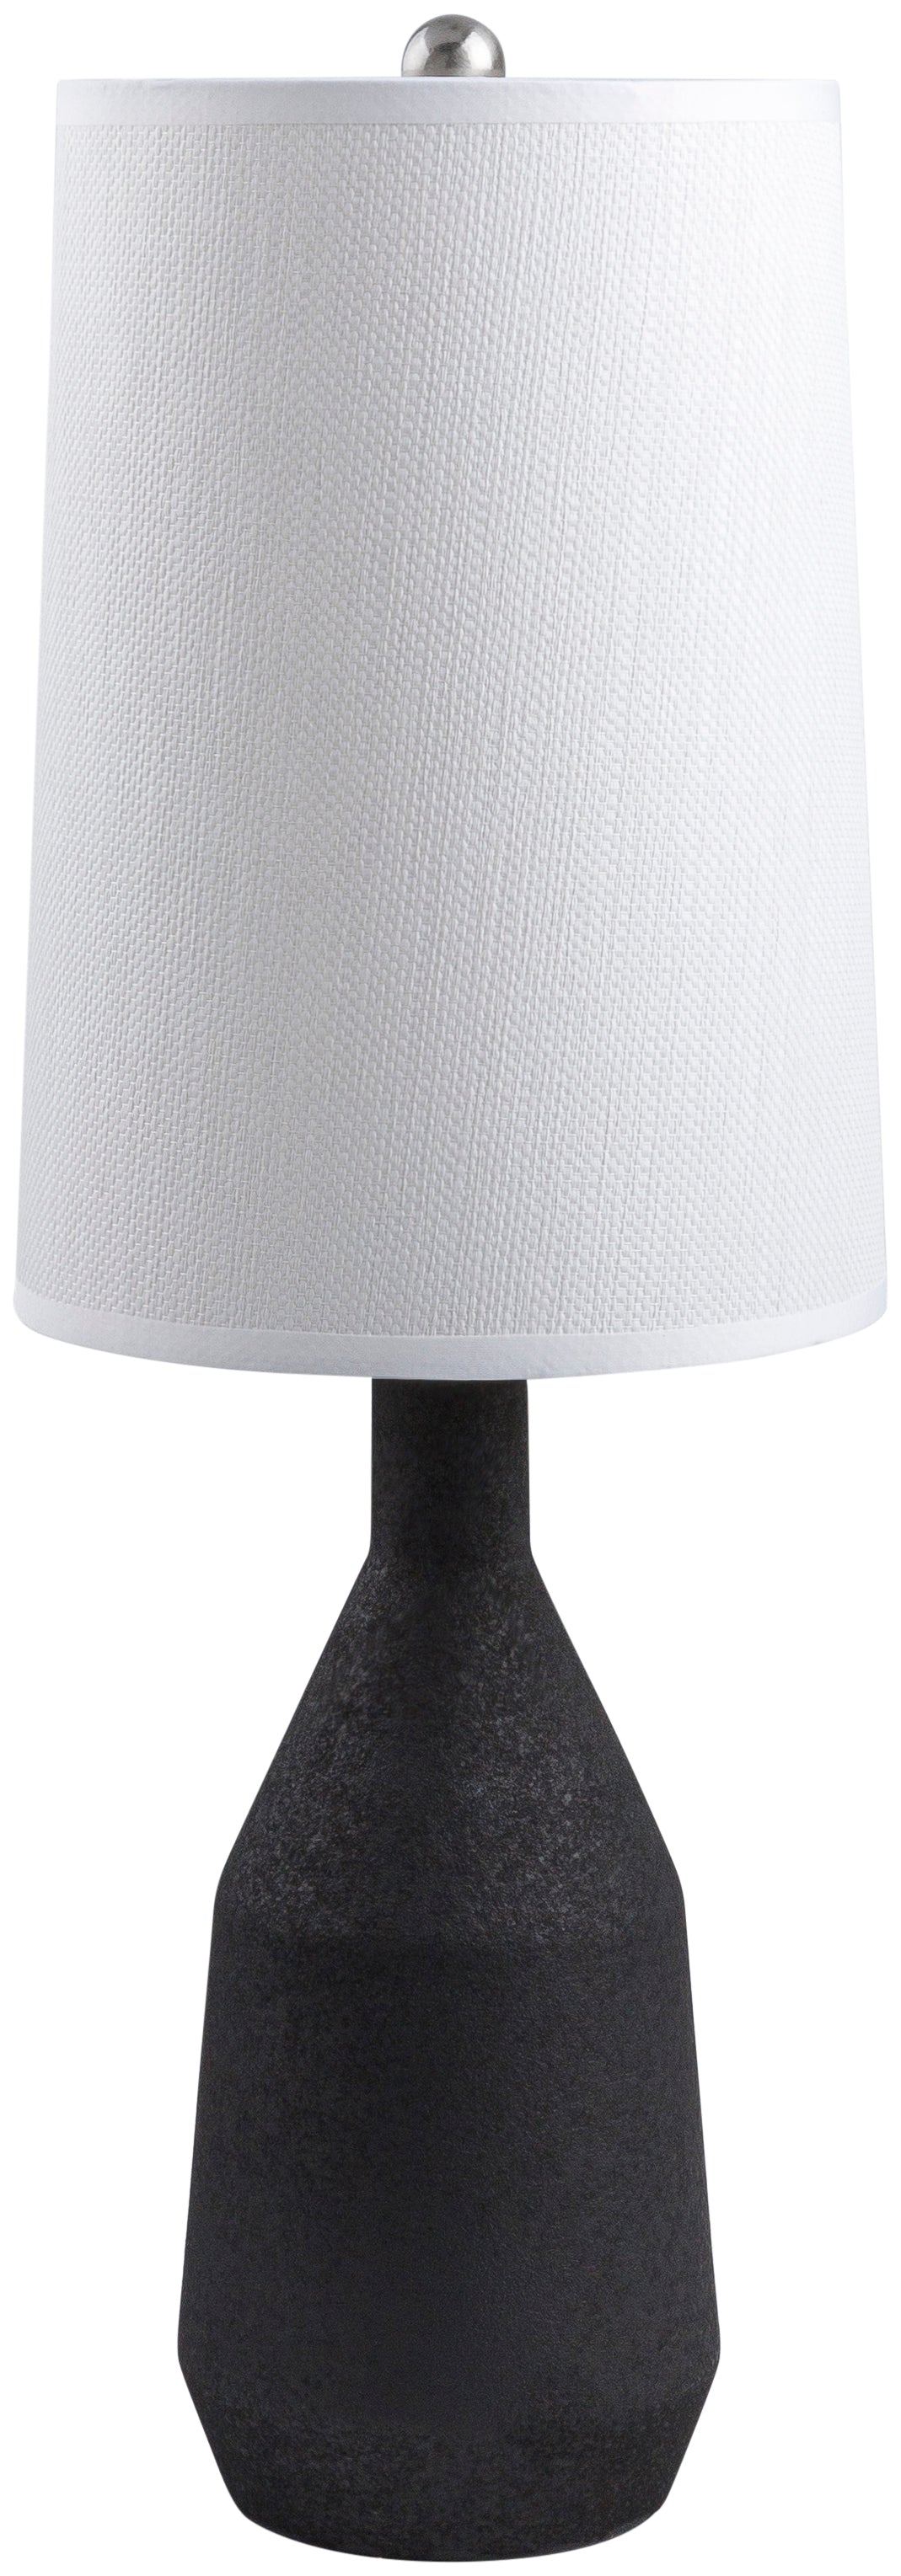 Gowanda Accent Table Lamp